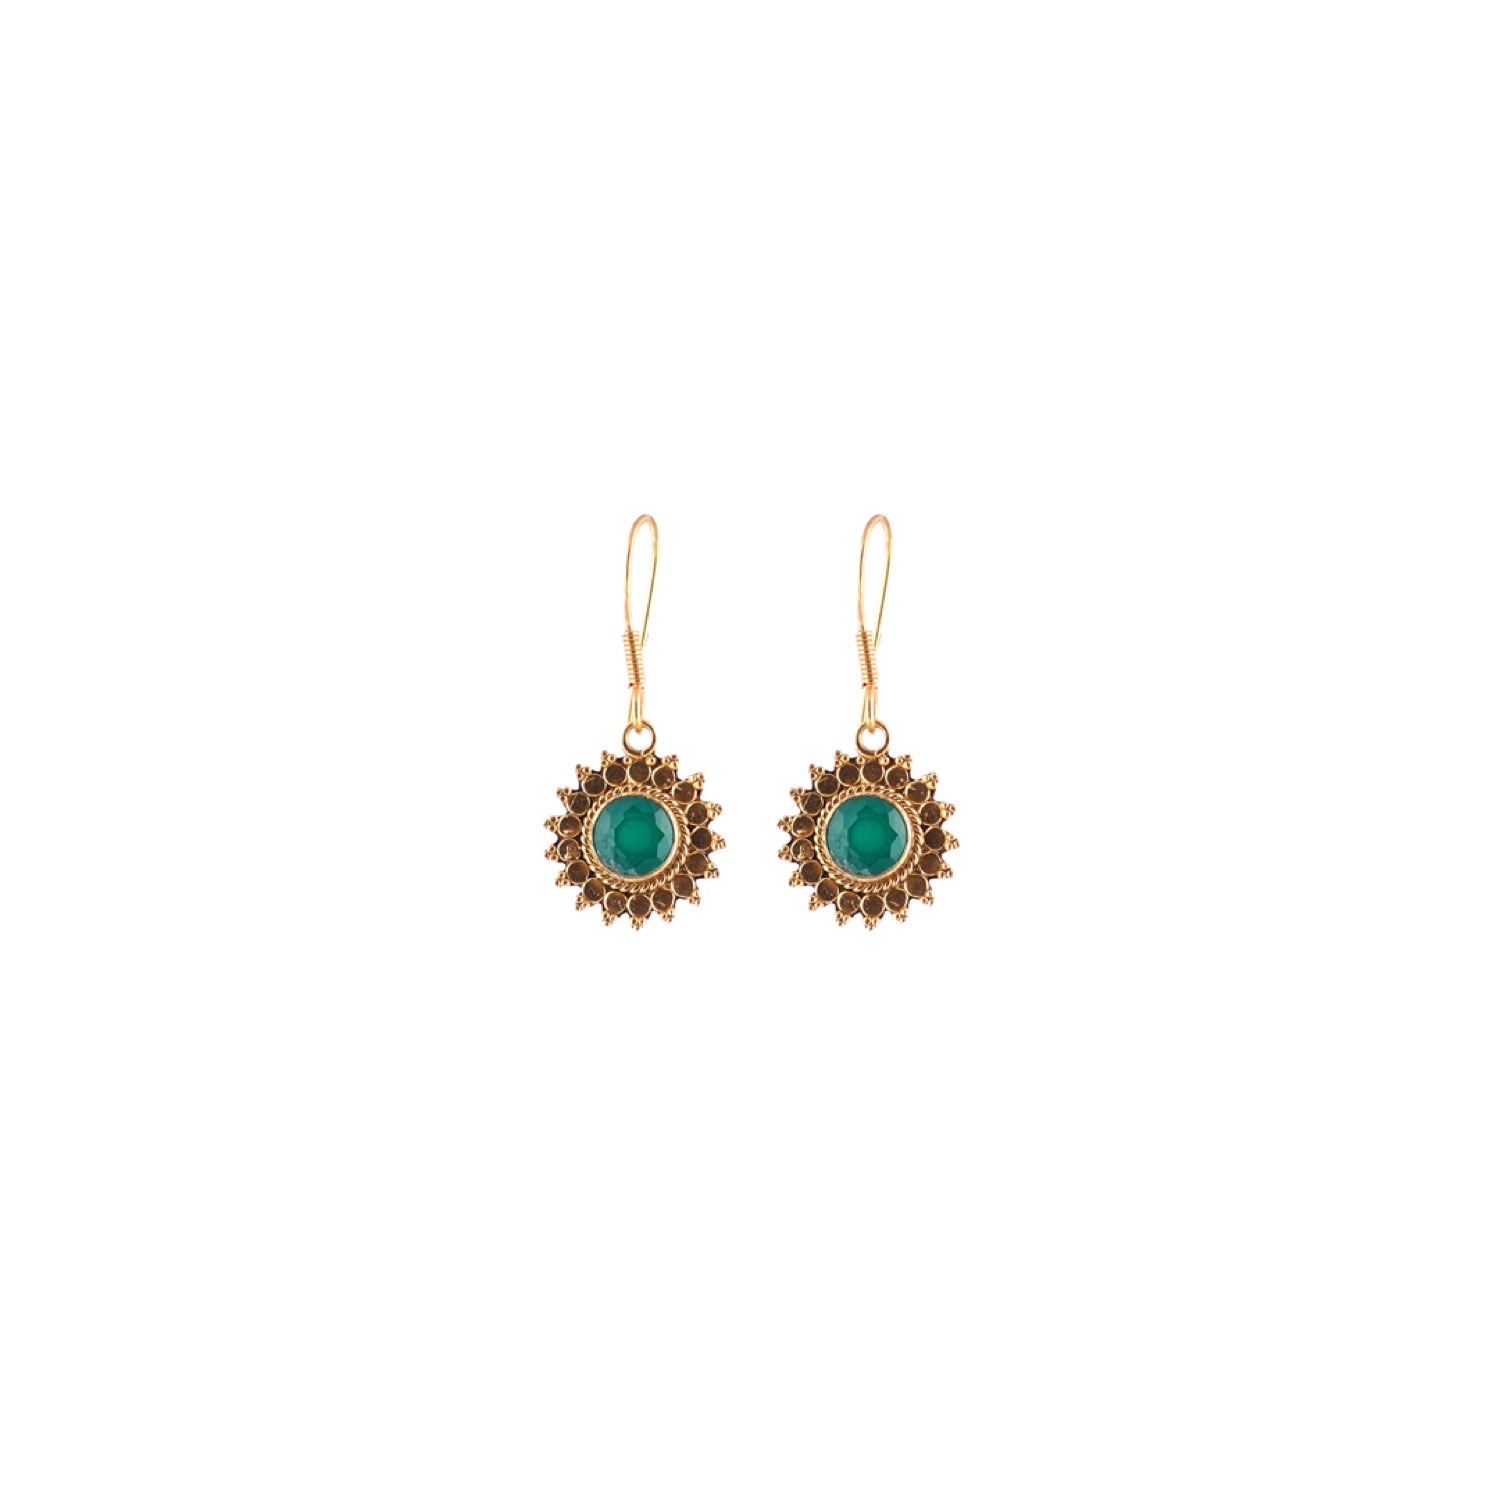 varam_earrings_102022_tarquoise_green_stone_hook_model_gold_coated_silver_earrings-1